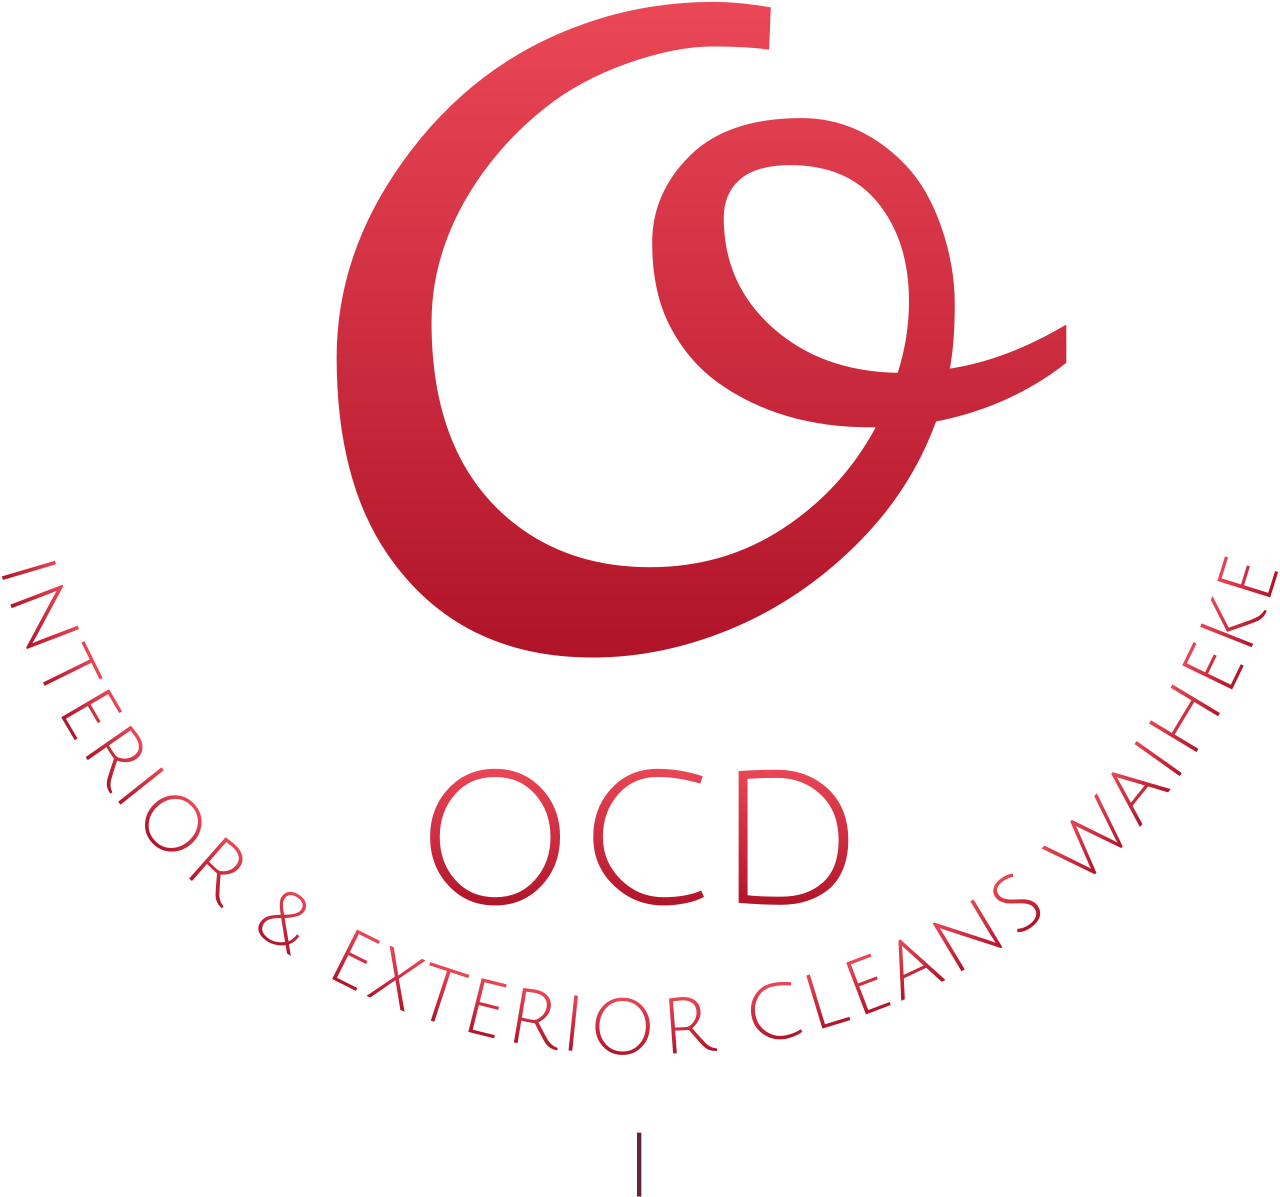 OCD's web page